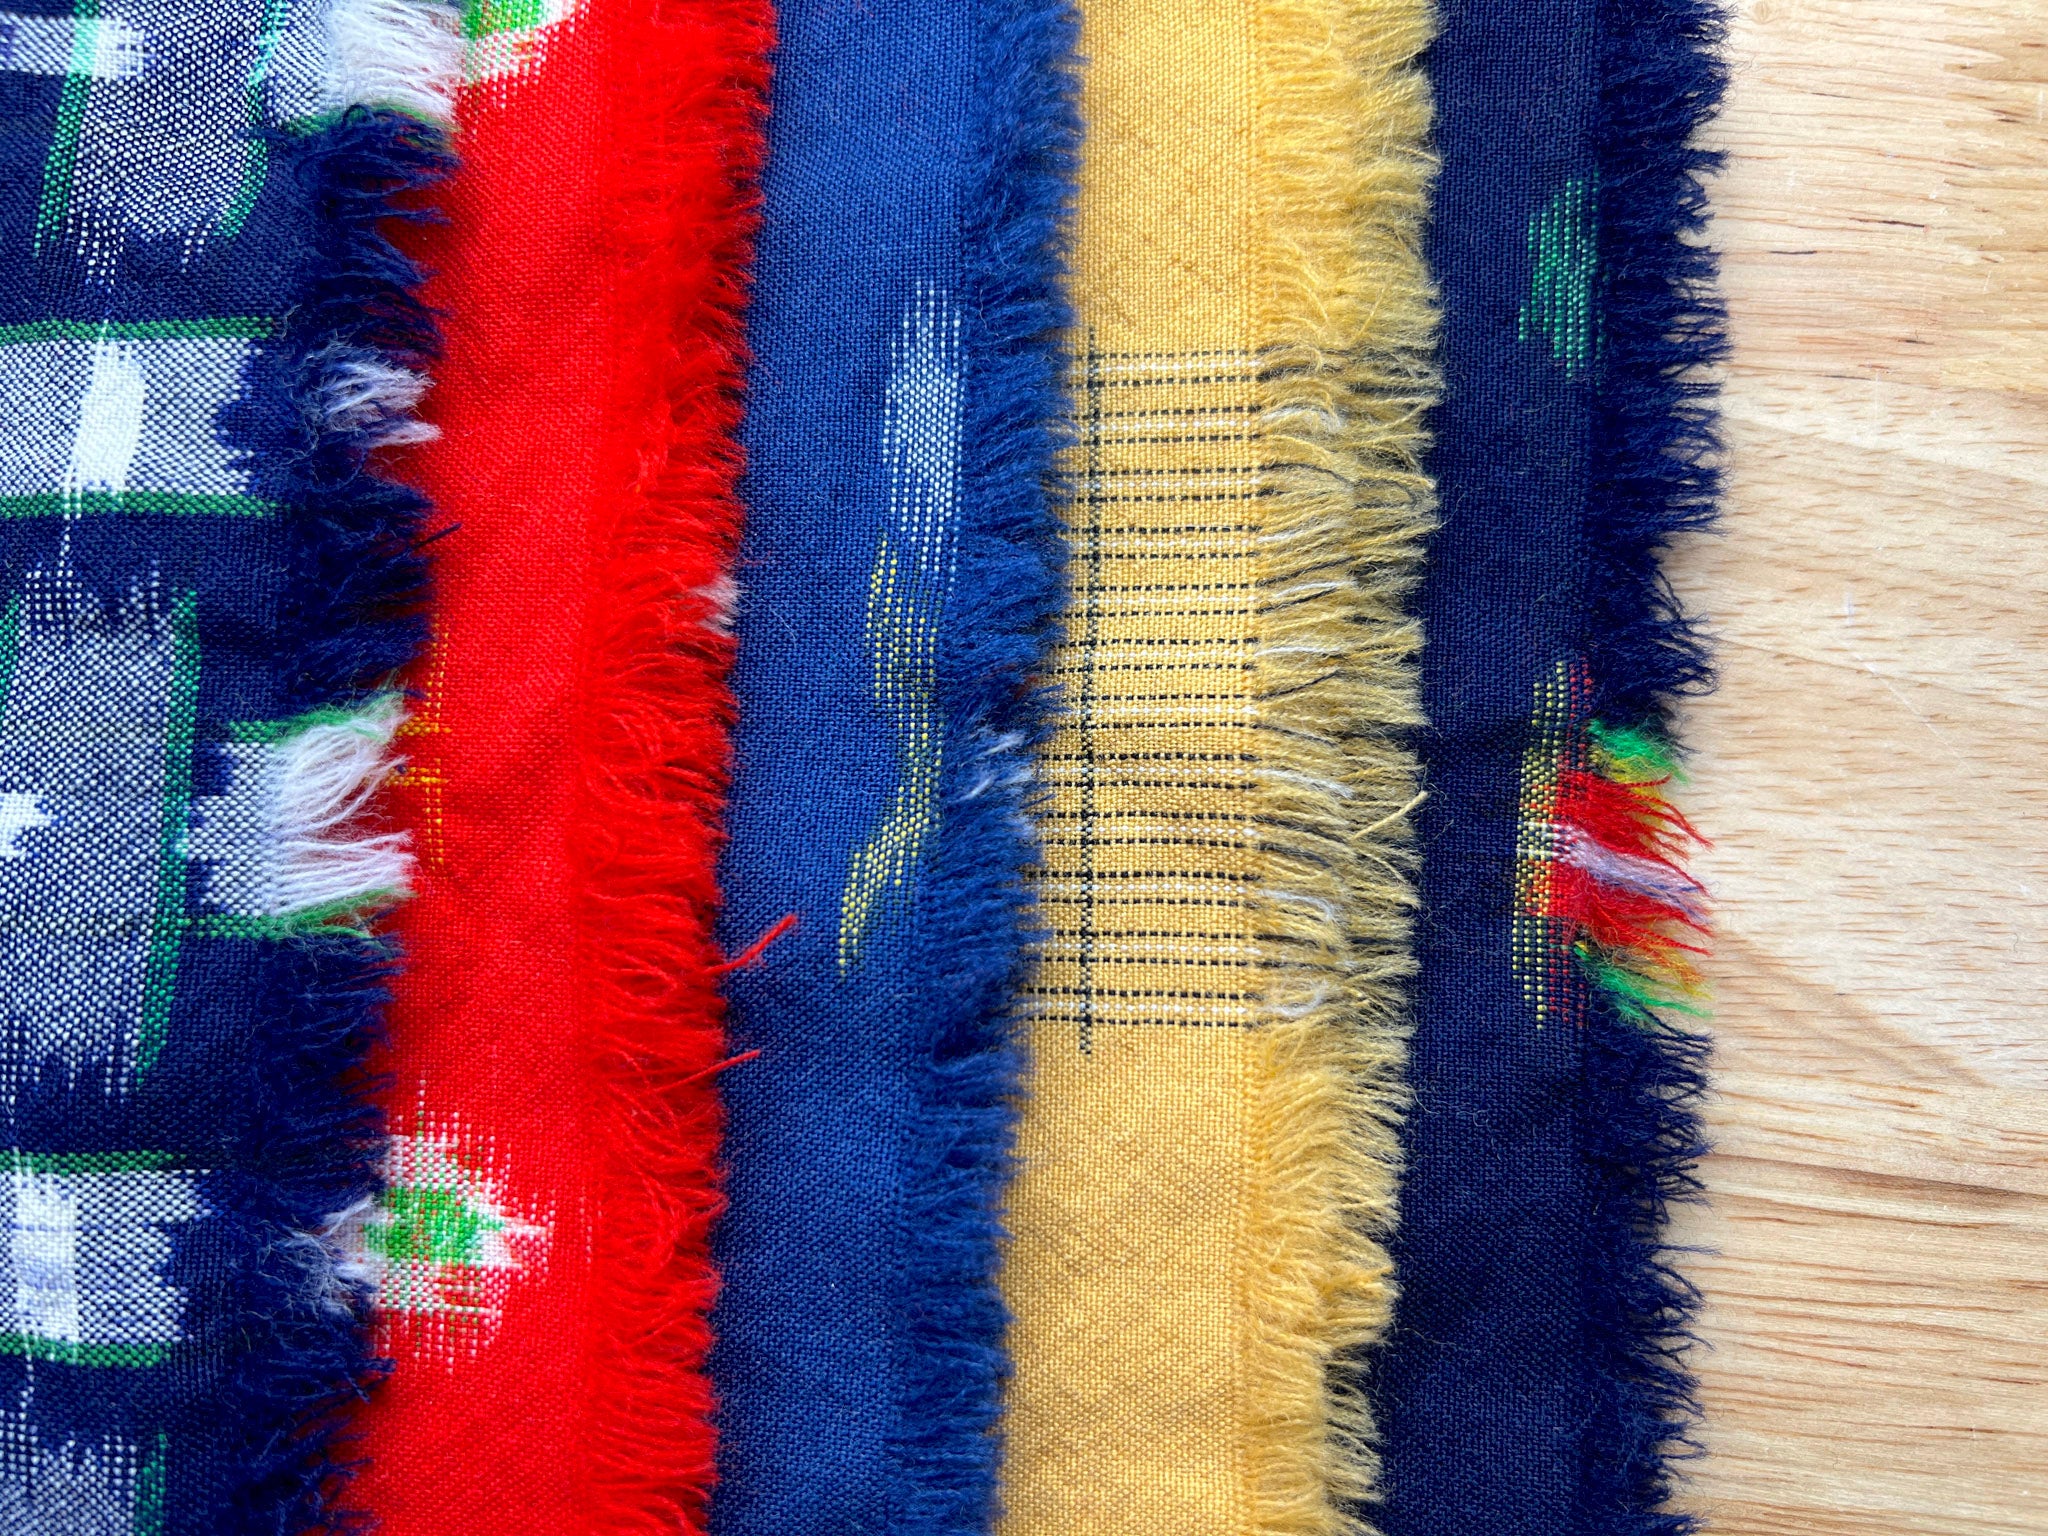 Gift-worthy kimono wool scarf project by Patricia Belyea of Okan Arts